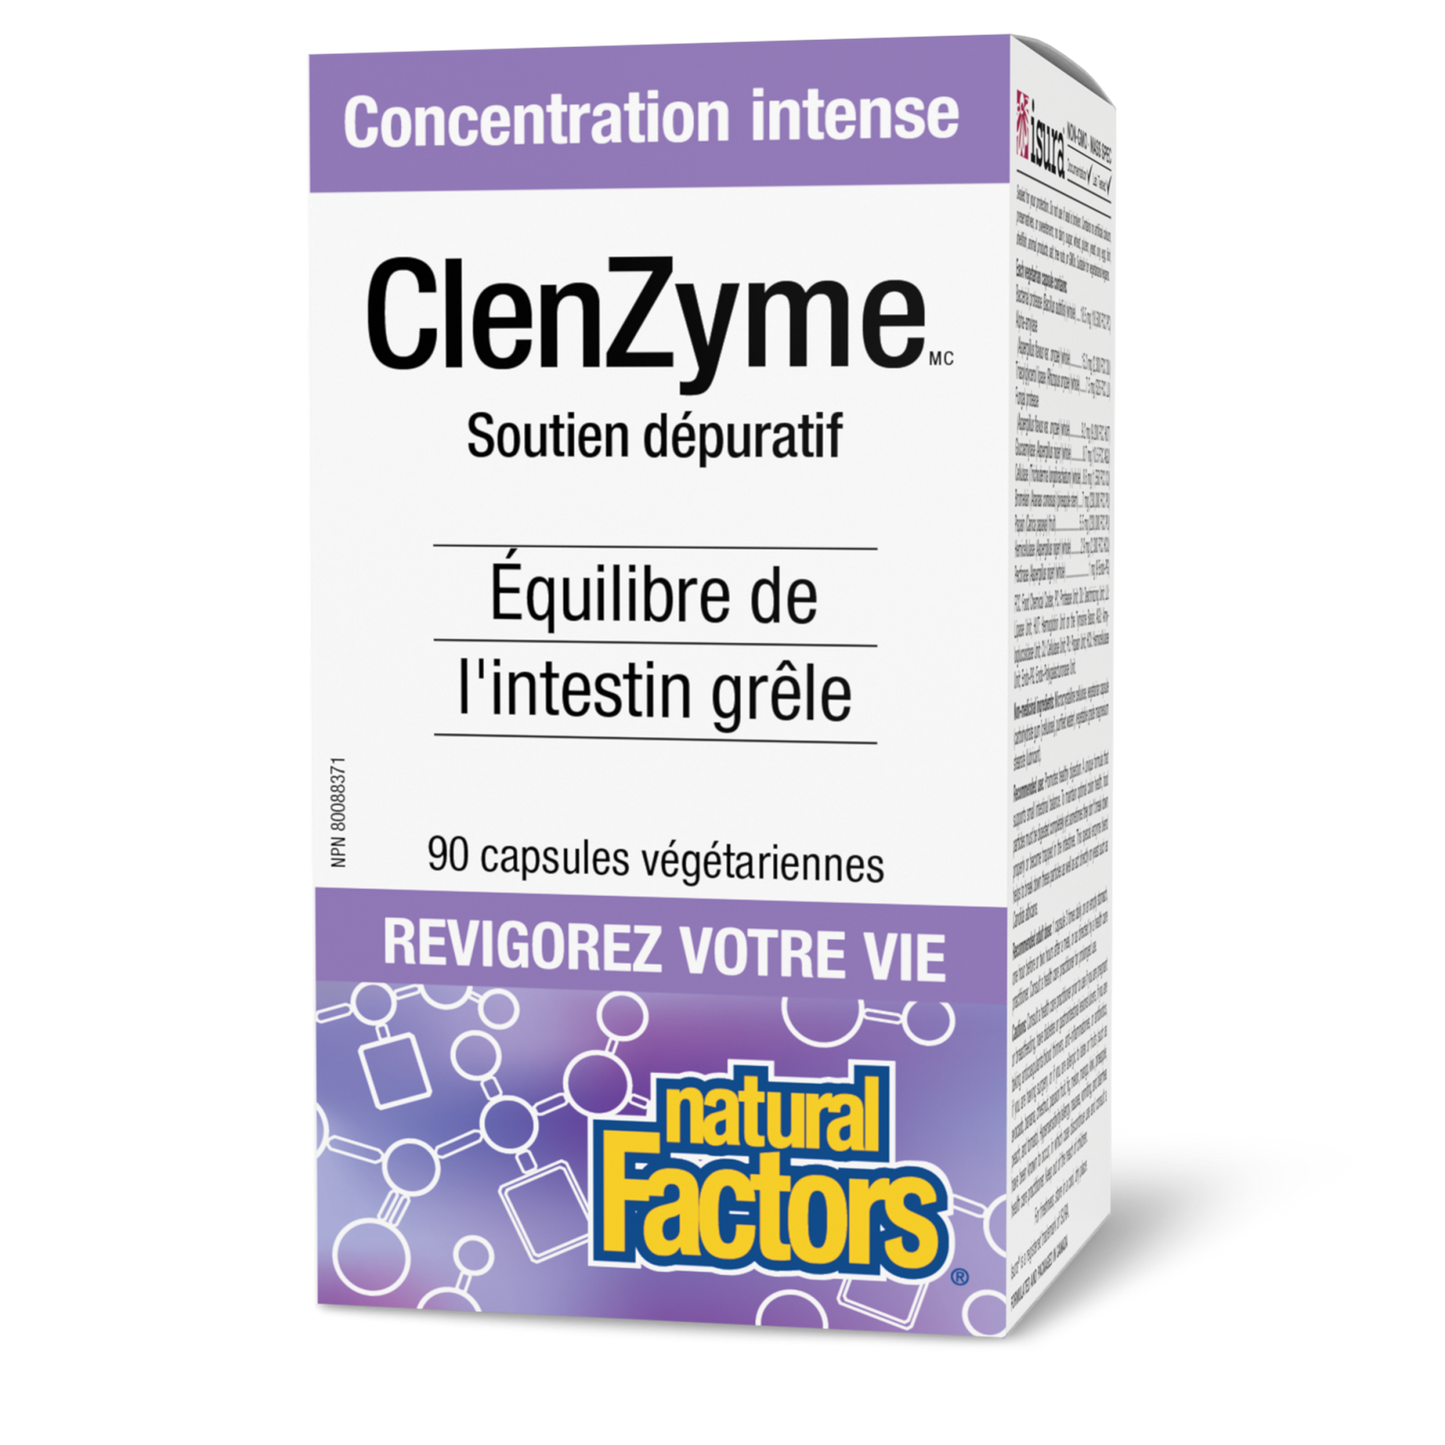 ClenZyme Concentration intense, Natural Factors|v|image|1726